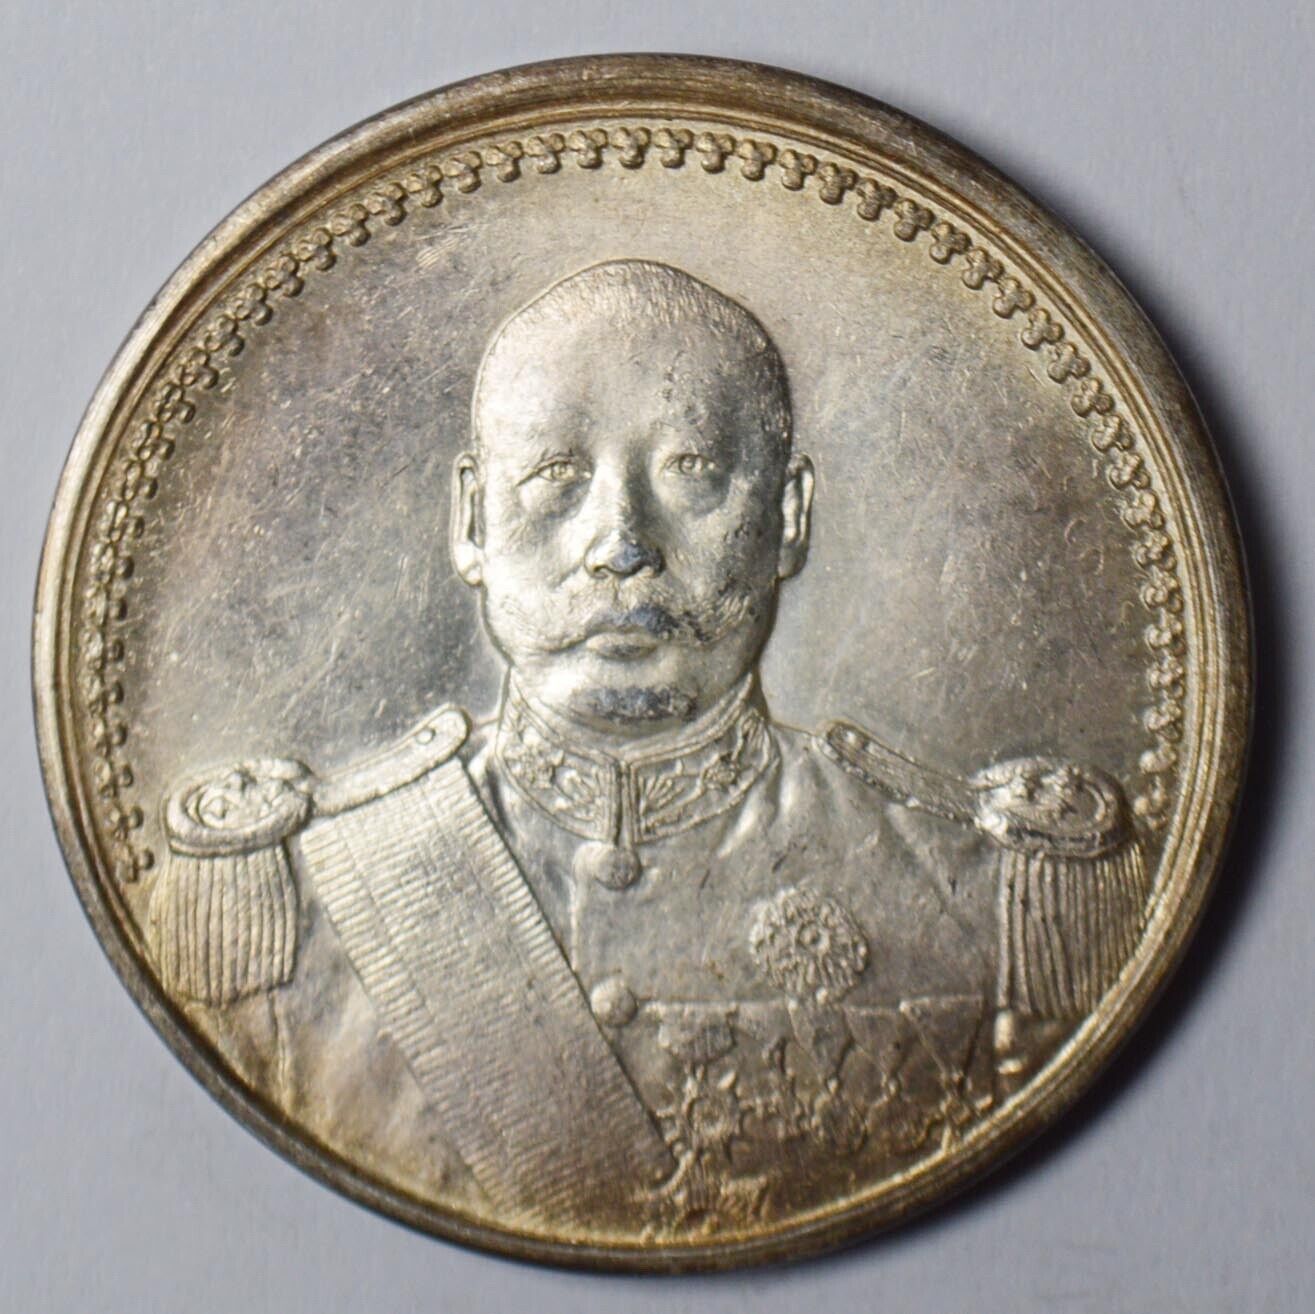 Republic of China President Cao Kun silver Commemorative medal coin 1923 A3